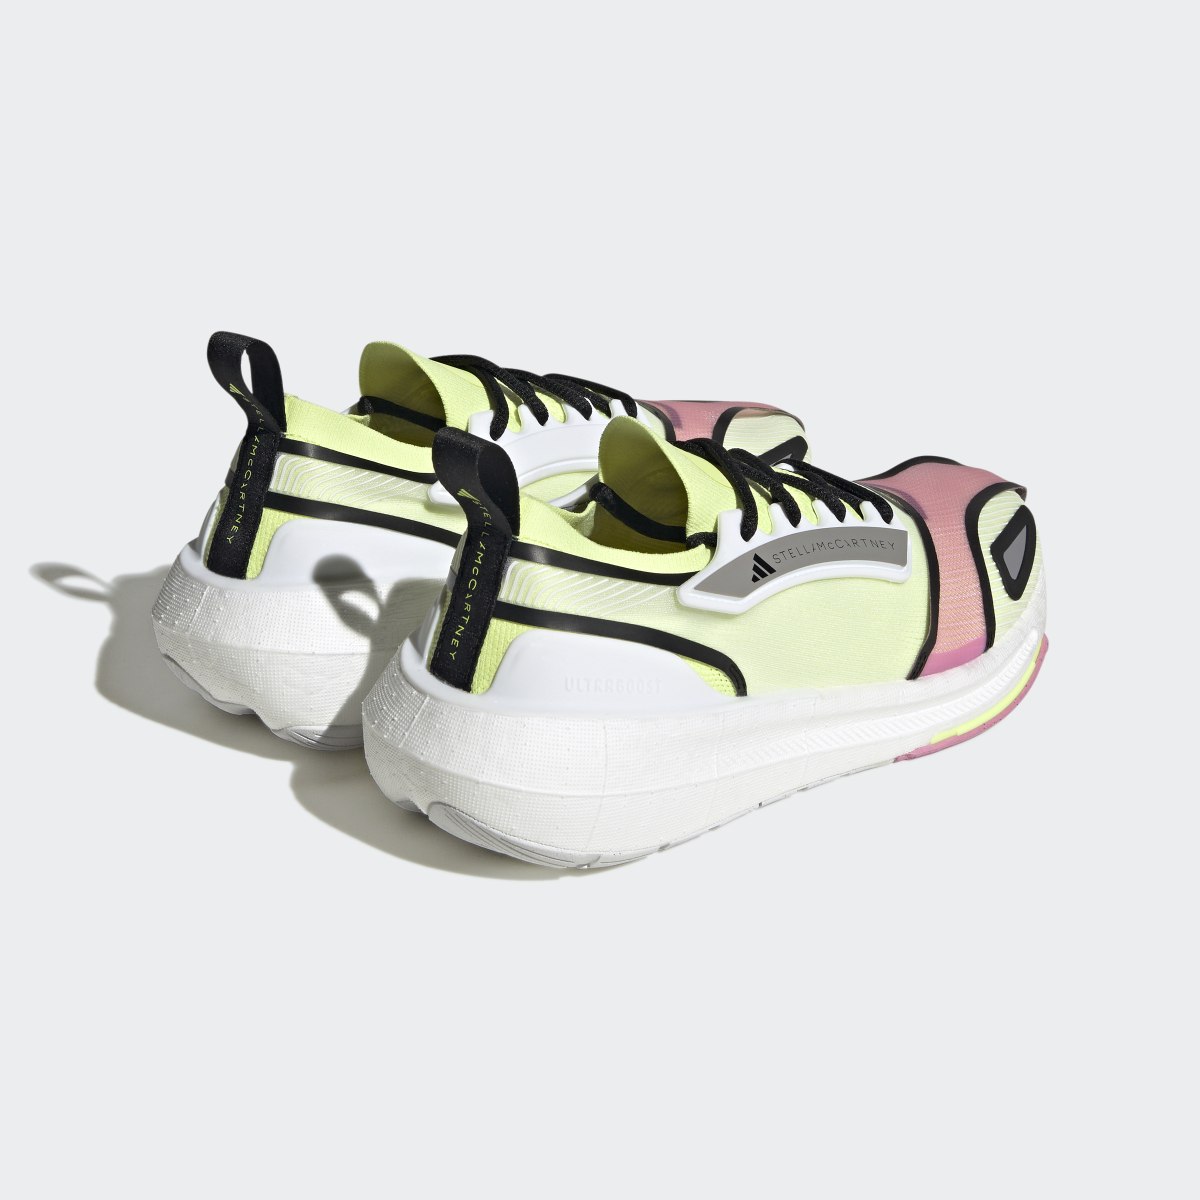 Adidas by Stella McCartney Ultraboost Light Ayakkabı. 9